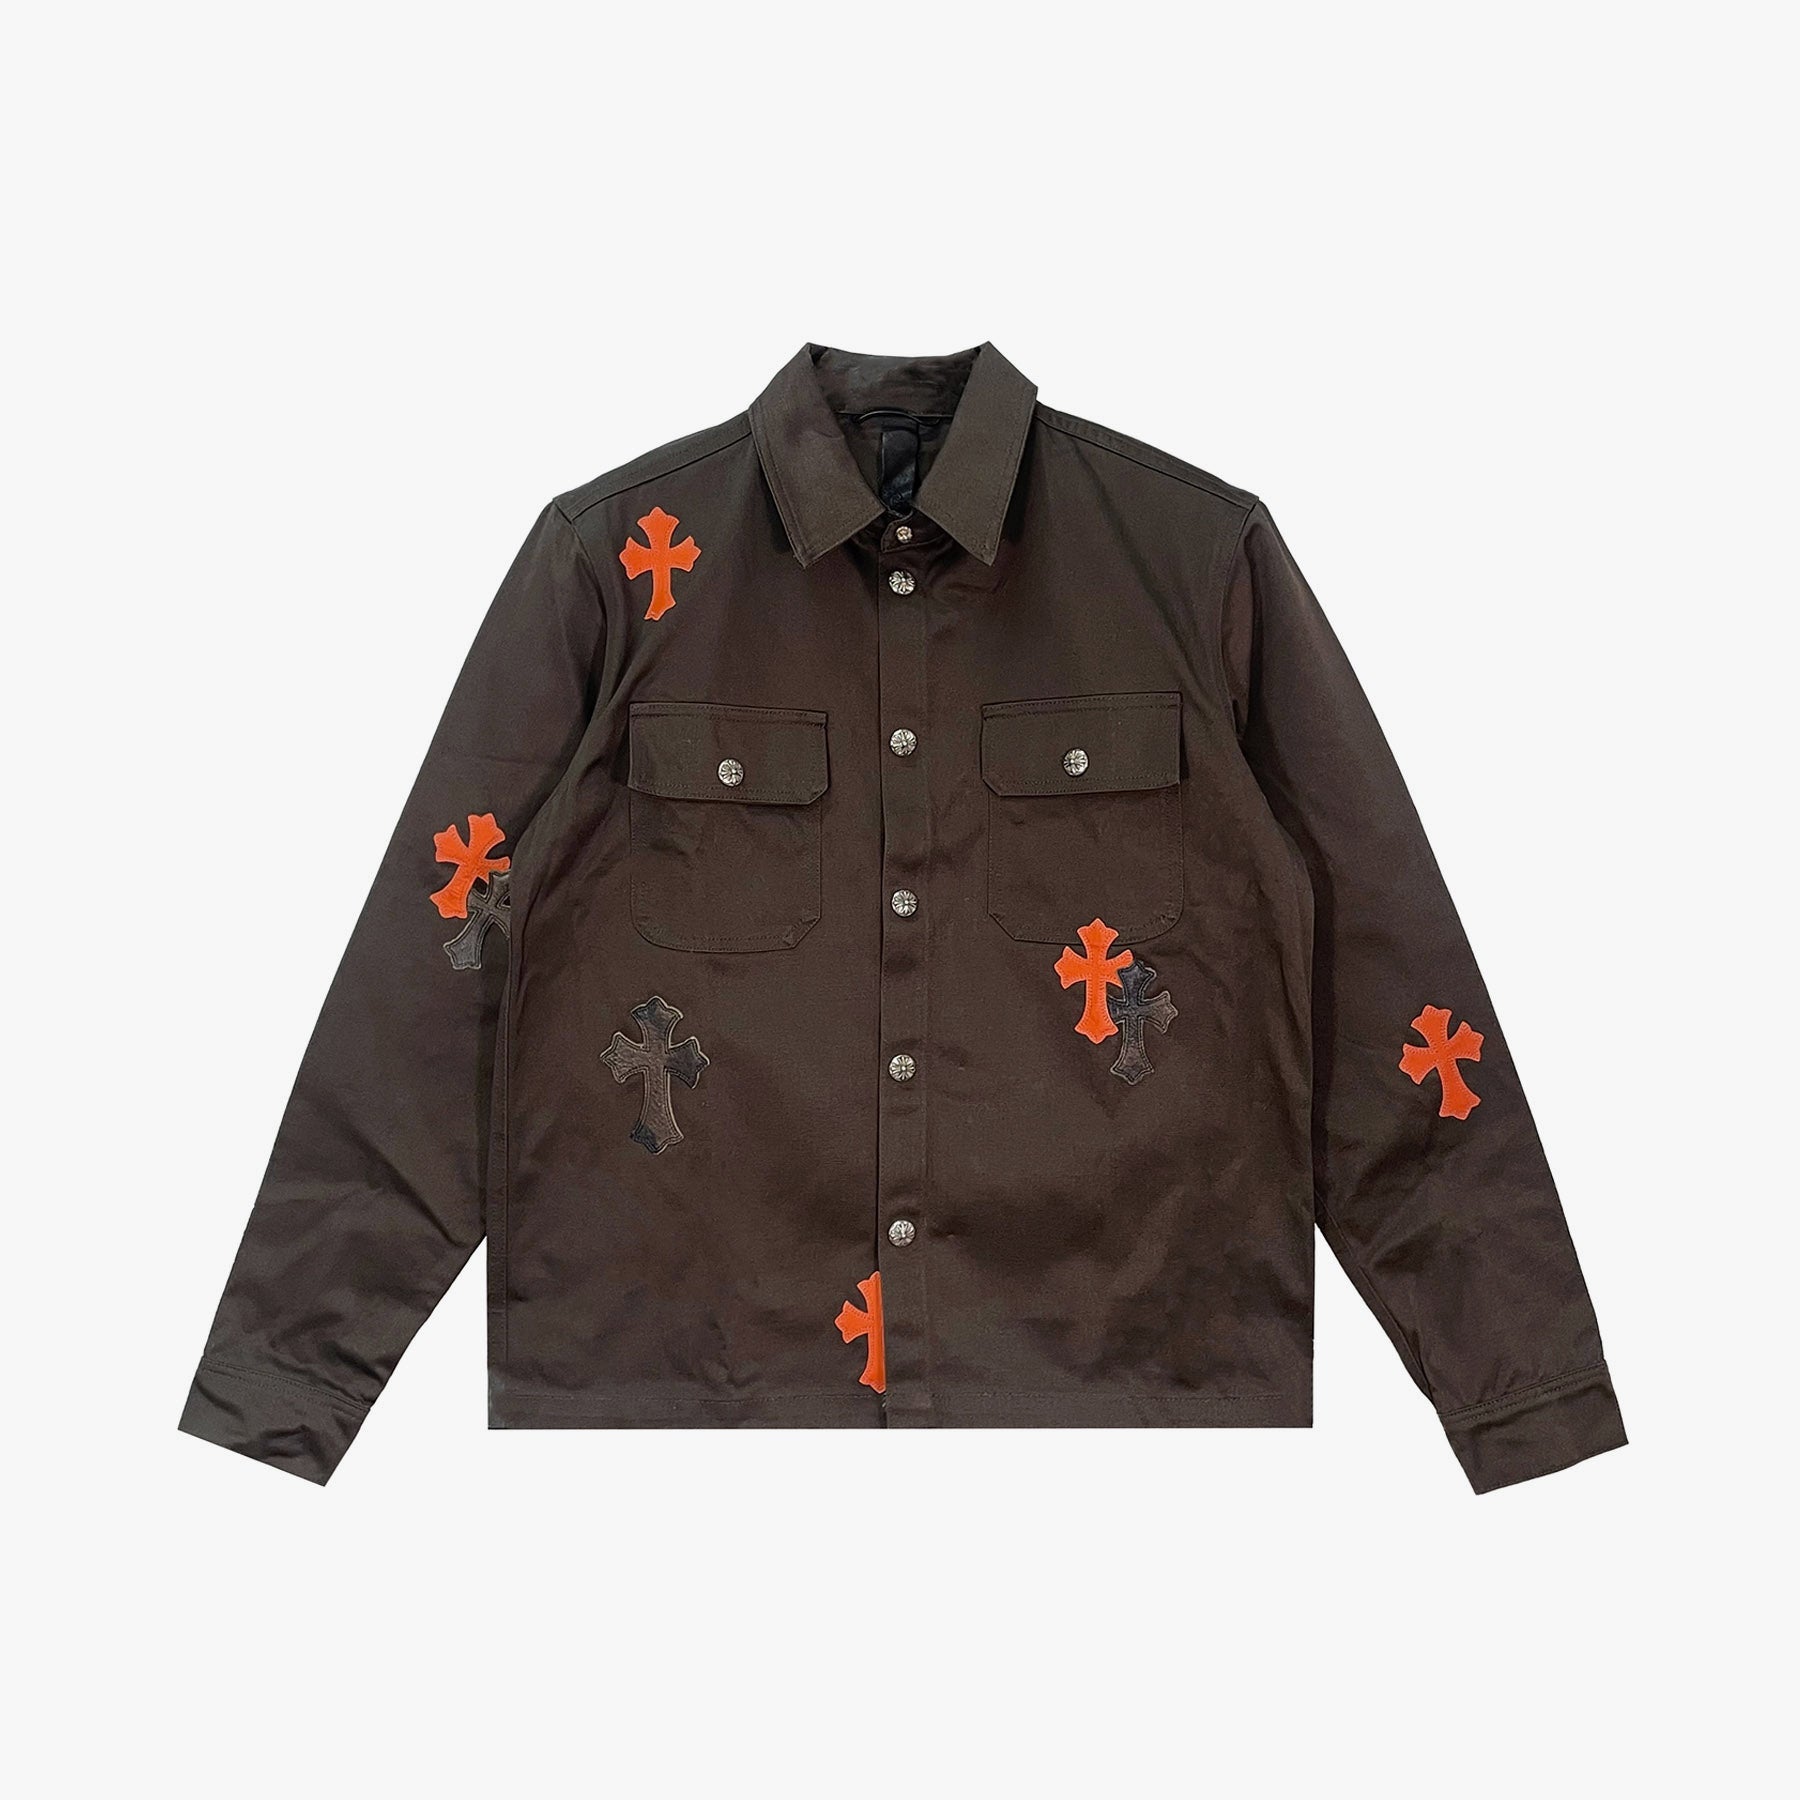 Chrome Hearts Work Dog Orange Leather Cross Patch Shirt Jacket